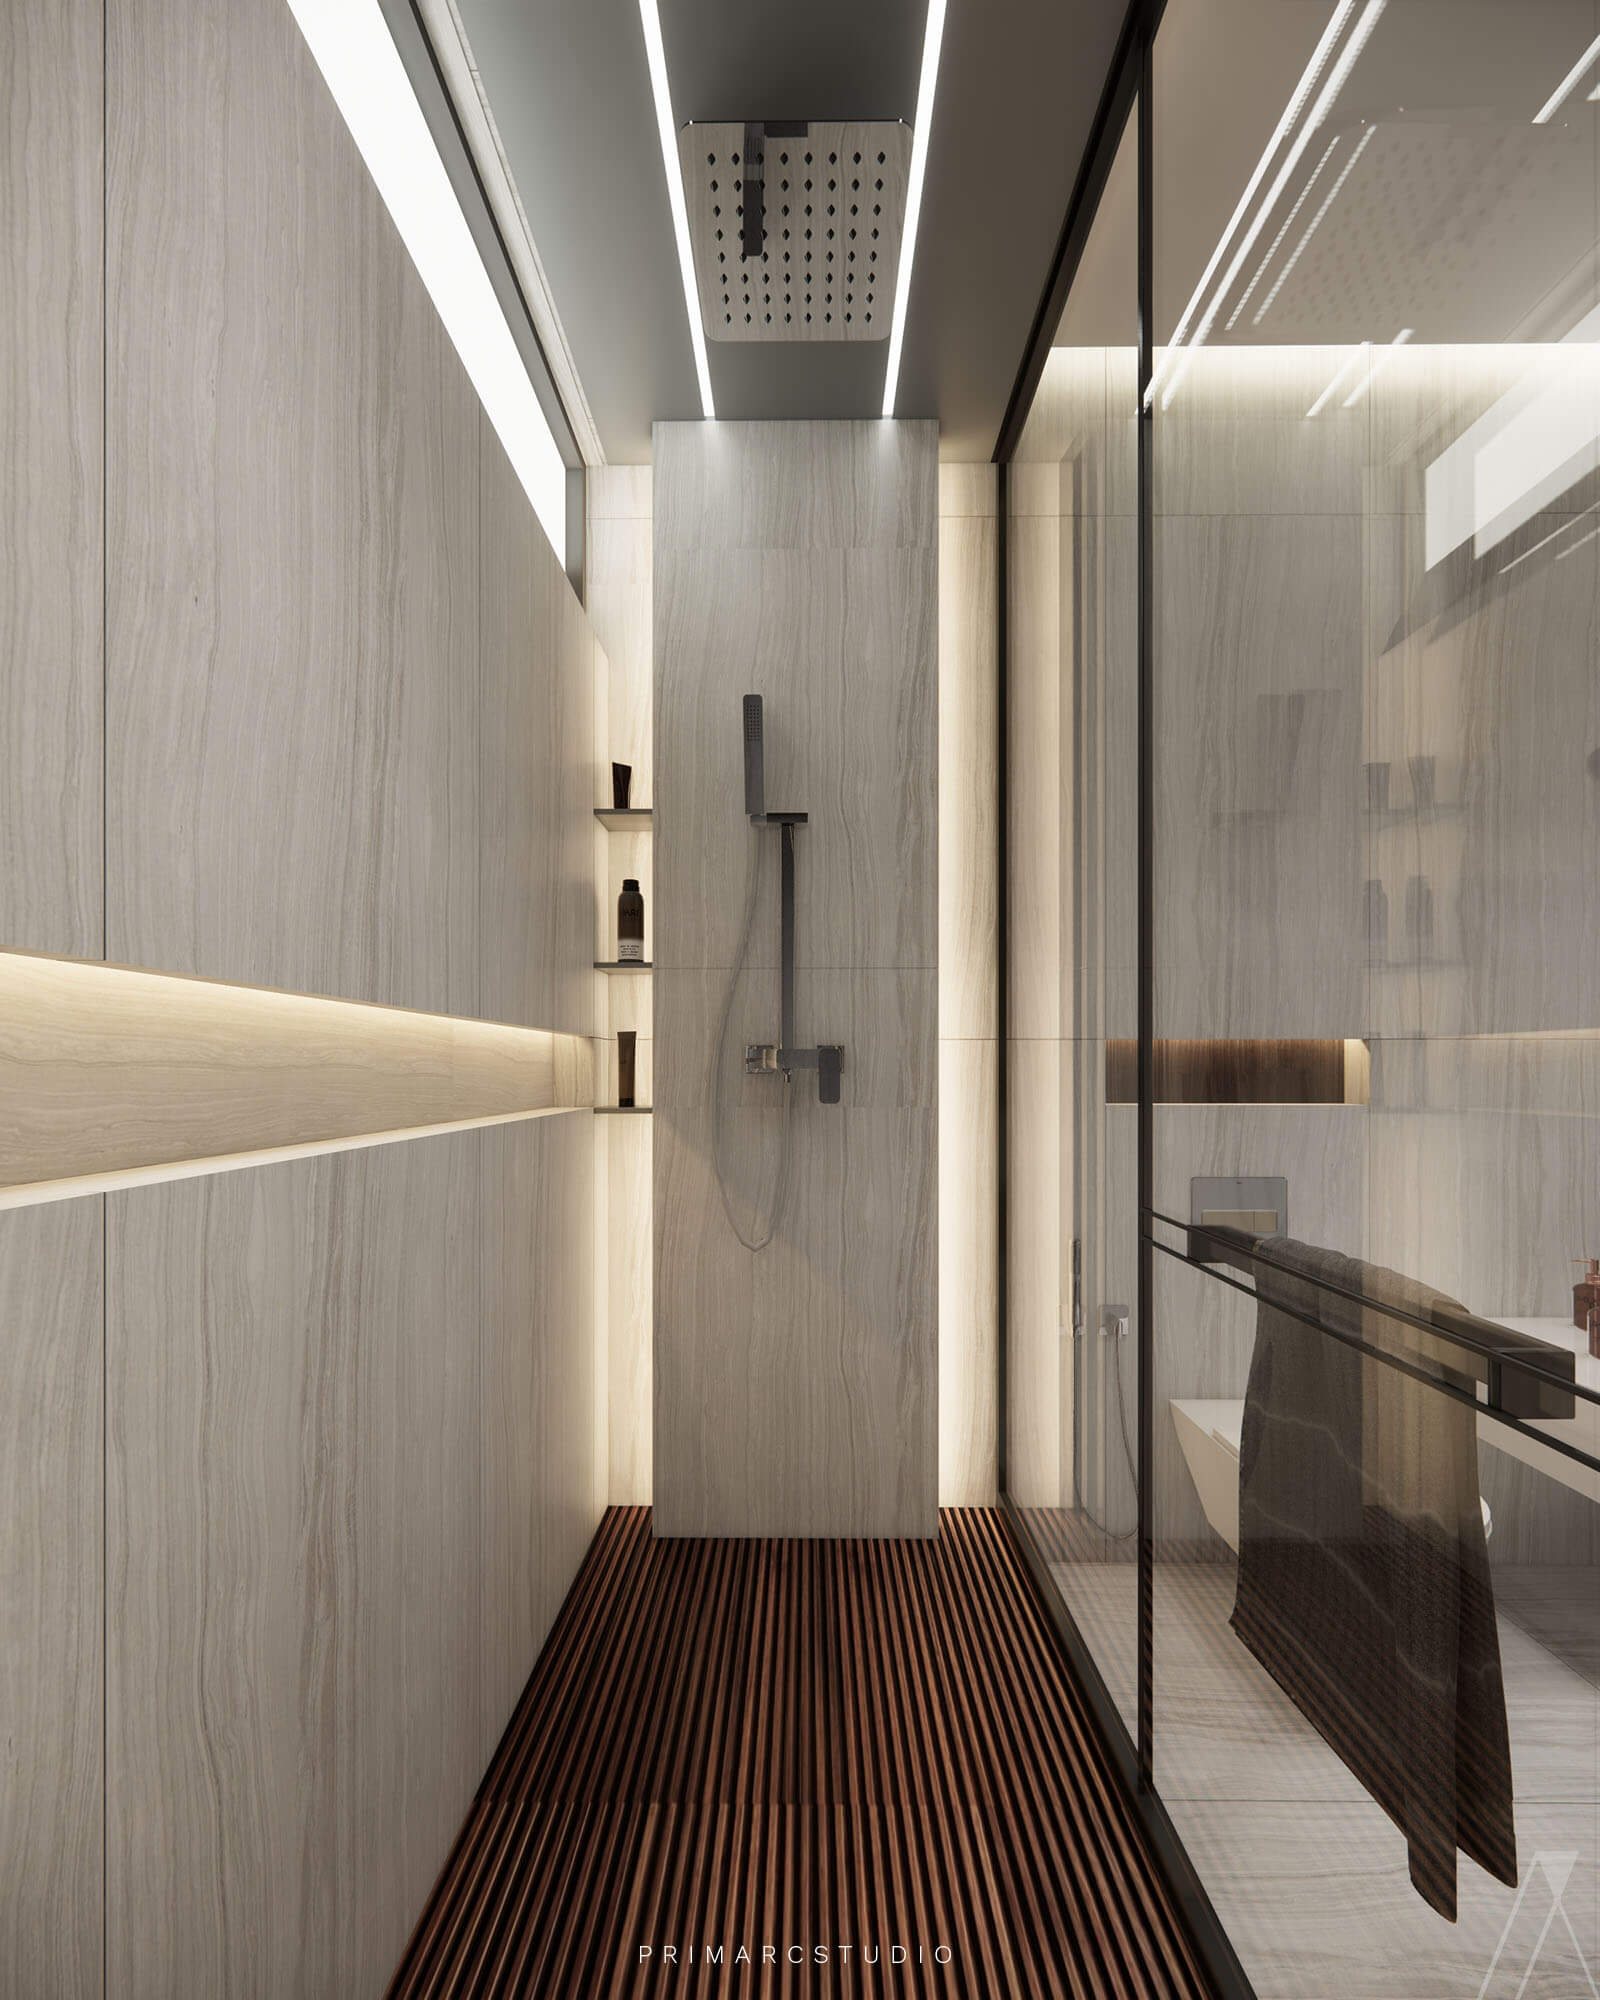 Washroom interior design in neutral colors shower area